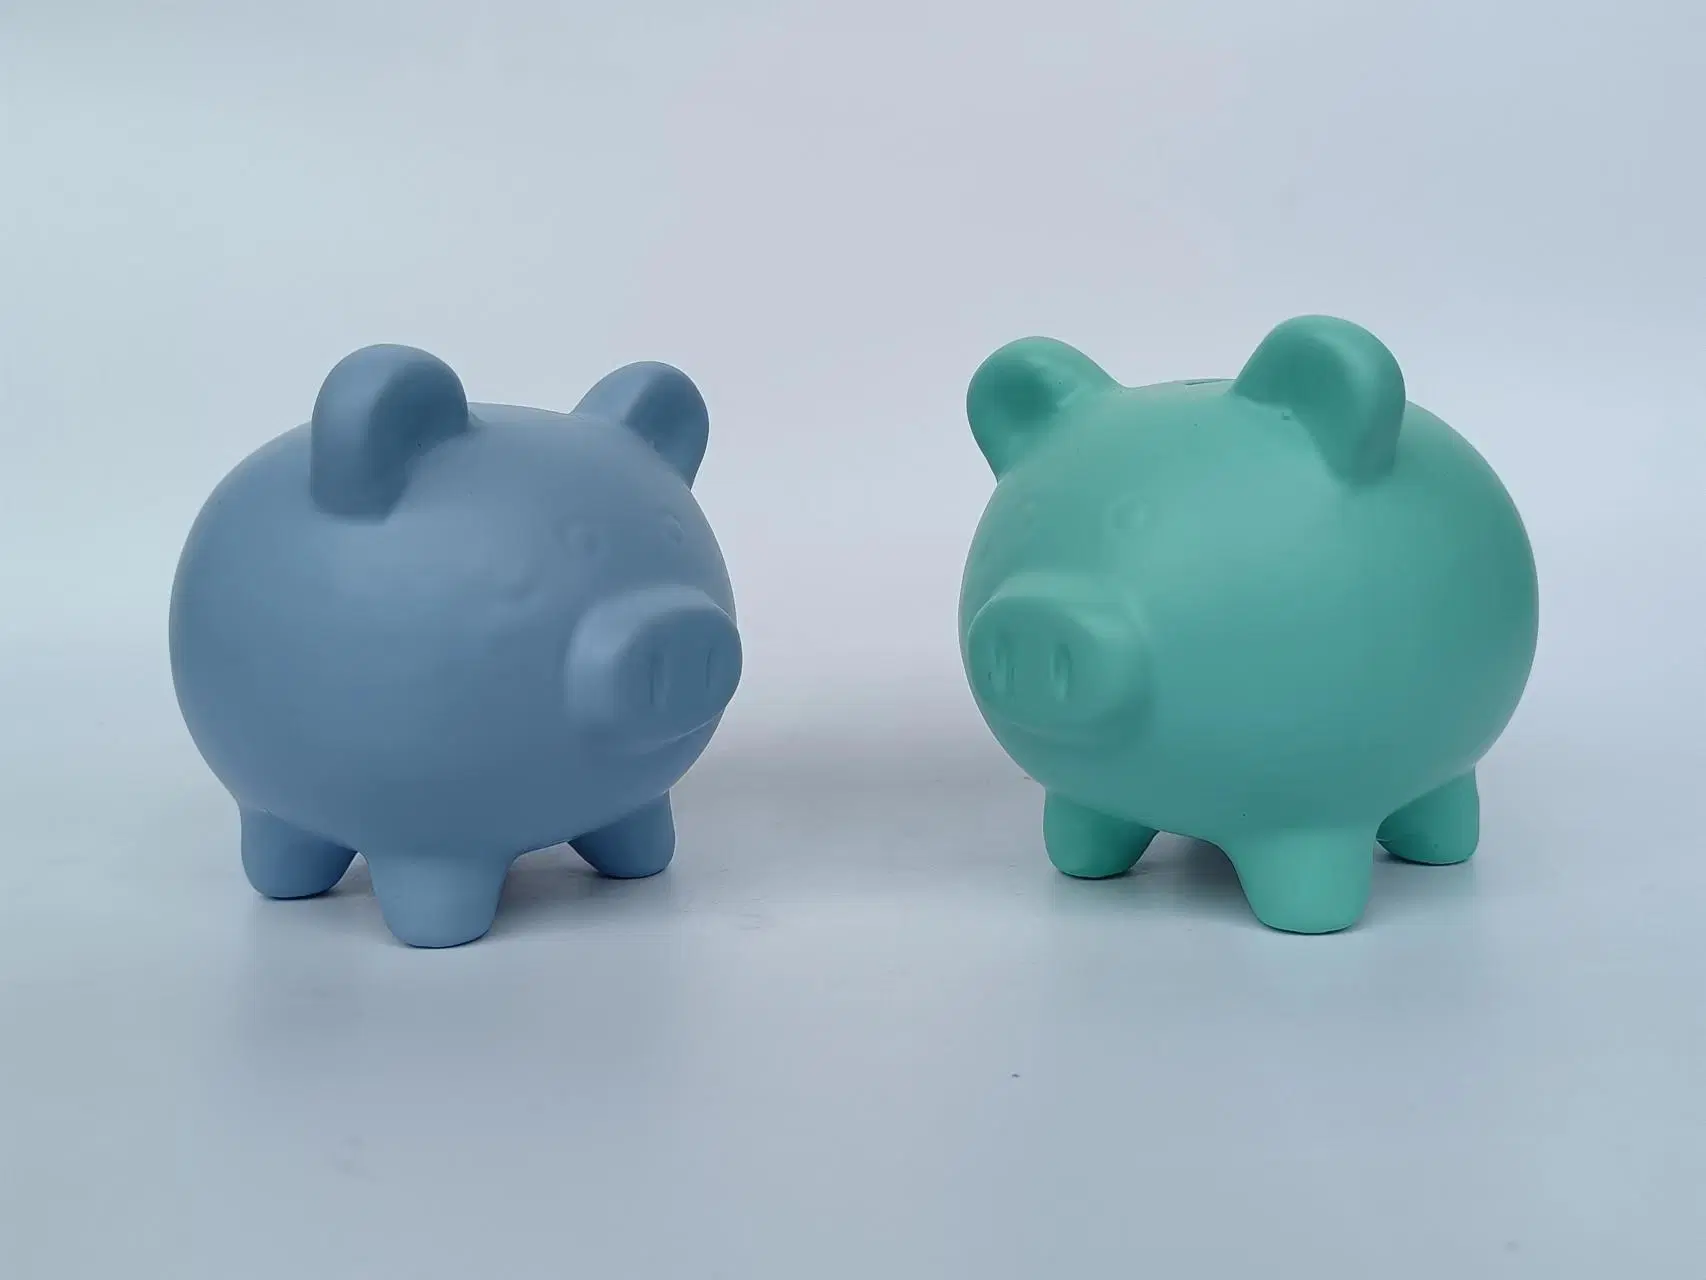 Ceramic Pig Piggy Banks Money Bank Coin Bank for Kids